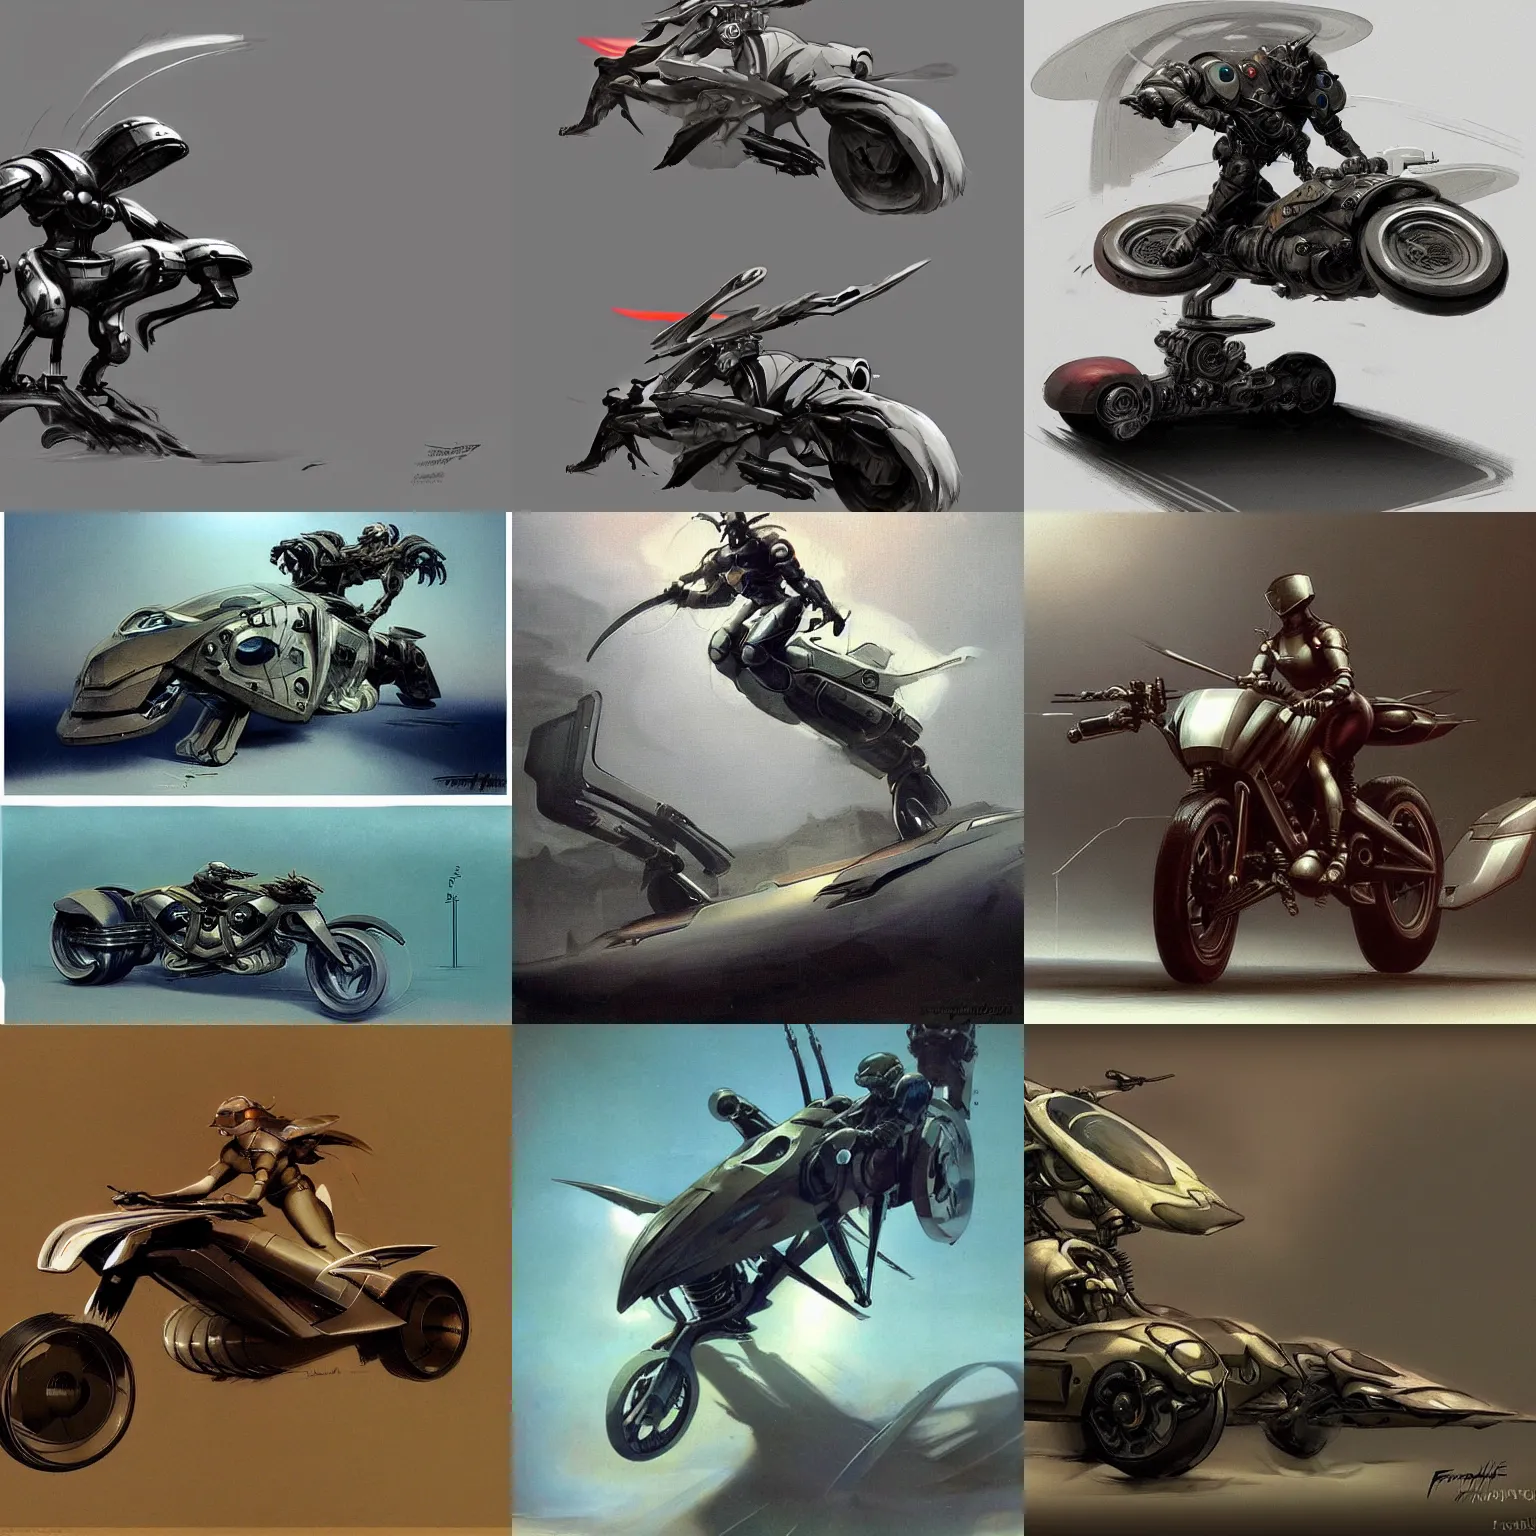 Prompt: futuristic hoverbike concept art by Frank frazetta trending on artstation